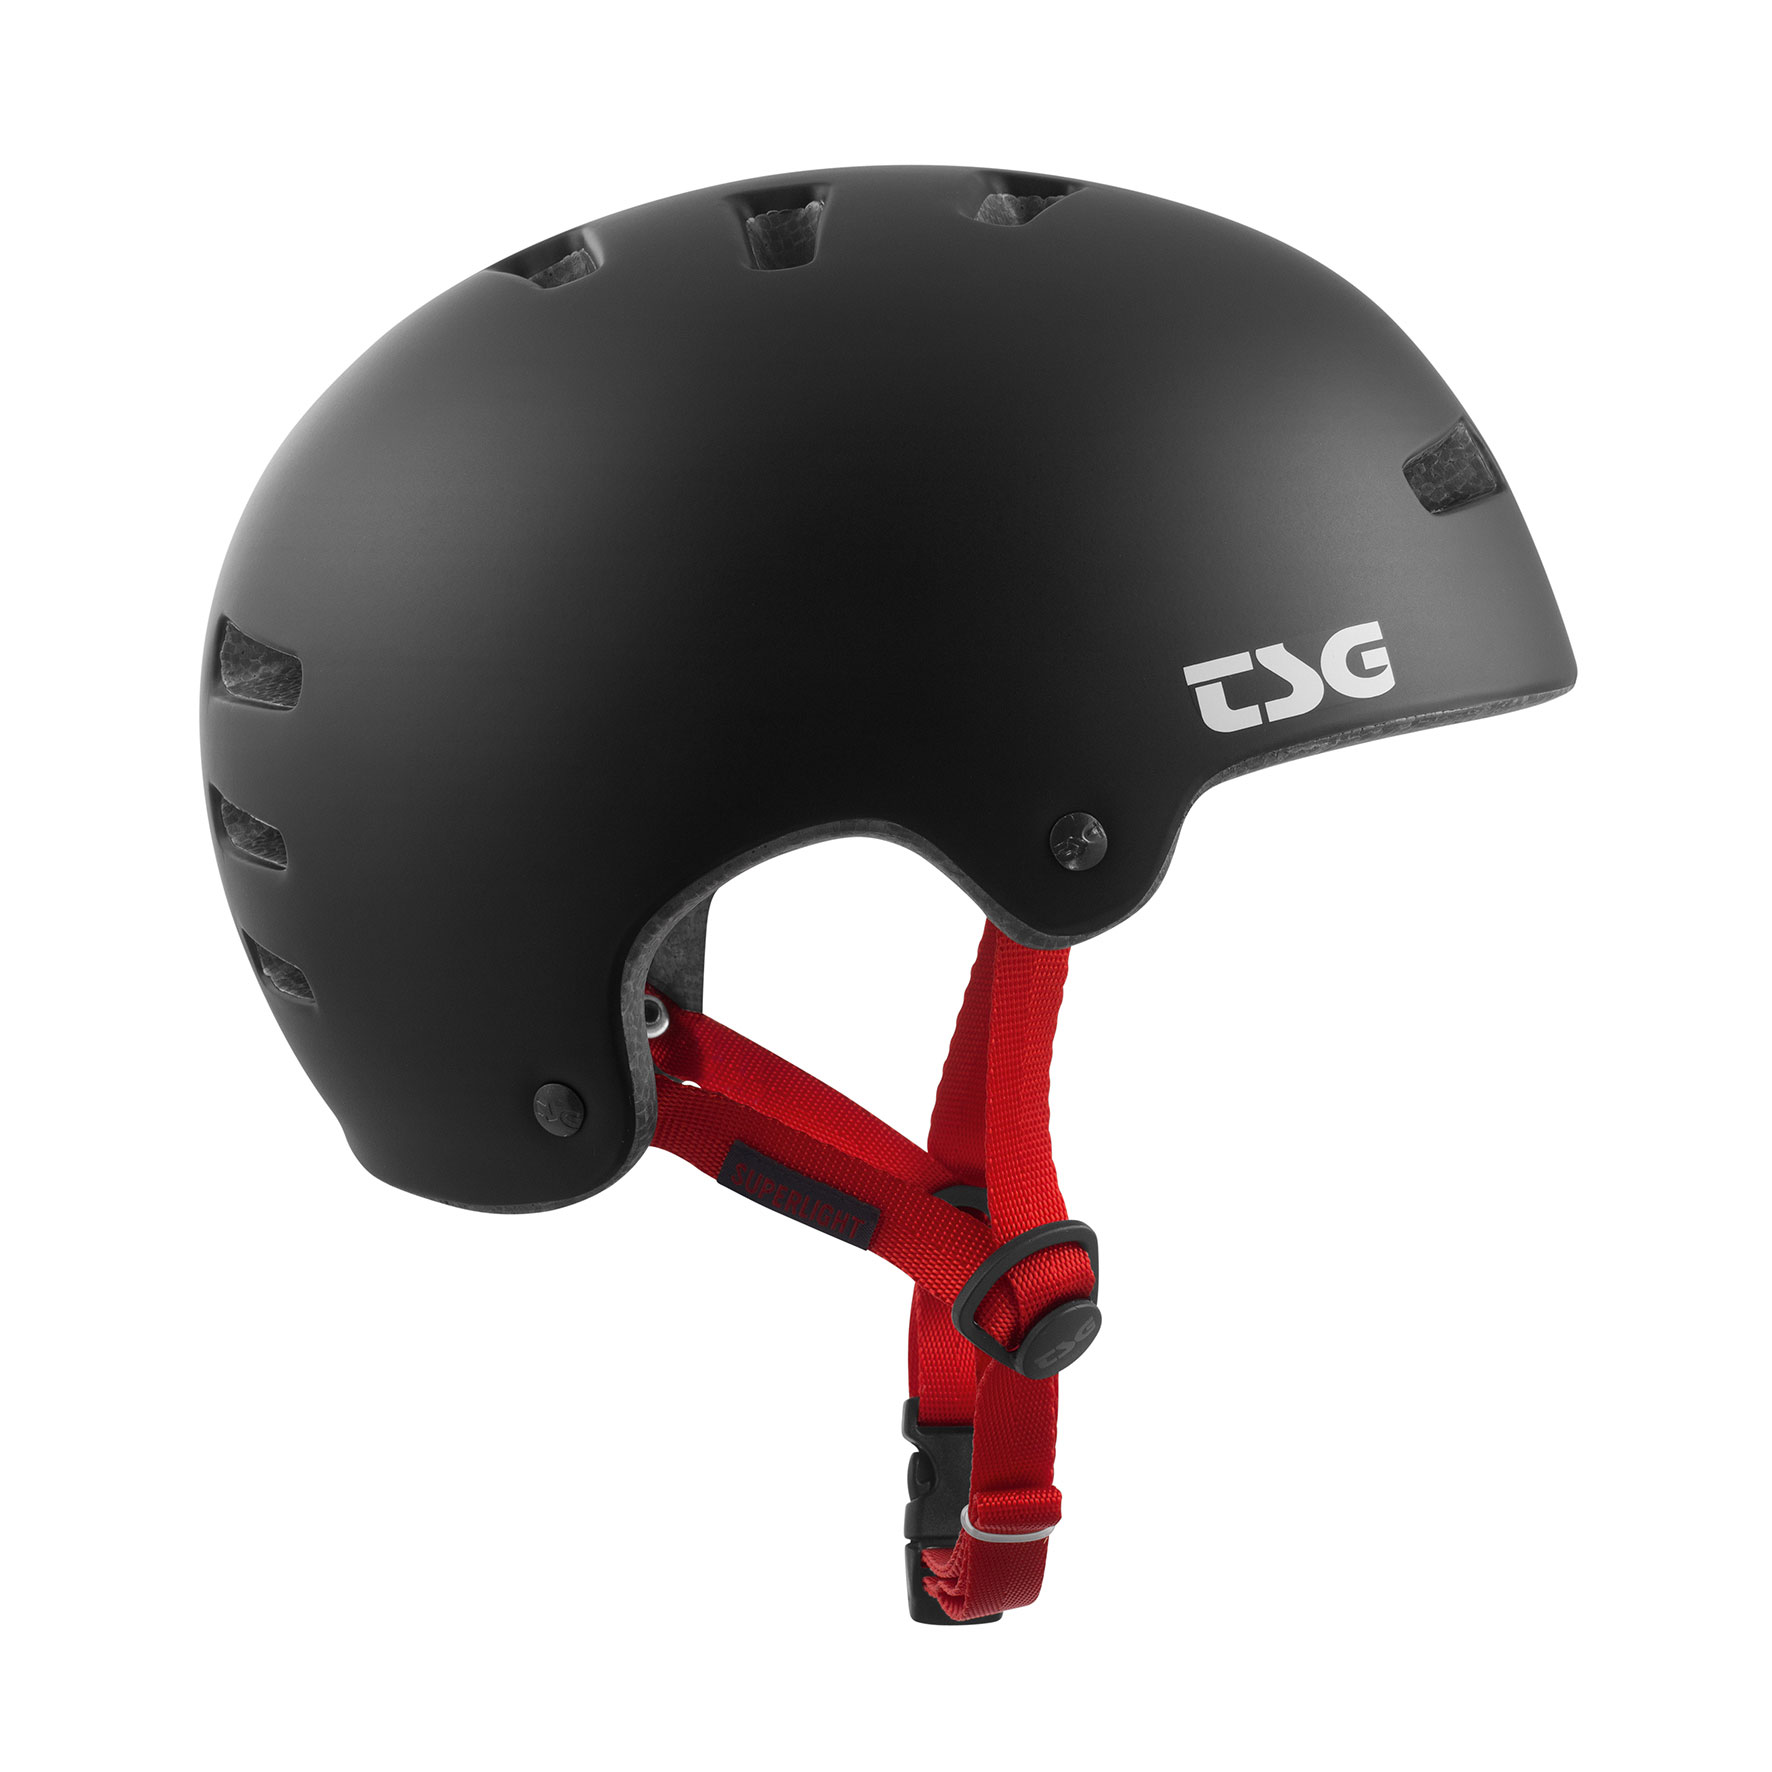 TSG Helm Superlight Solid Color (satin black)